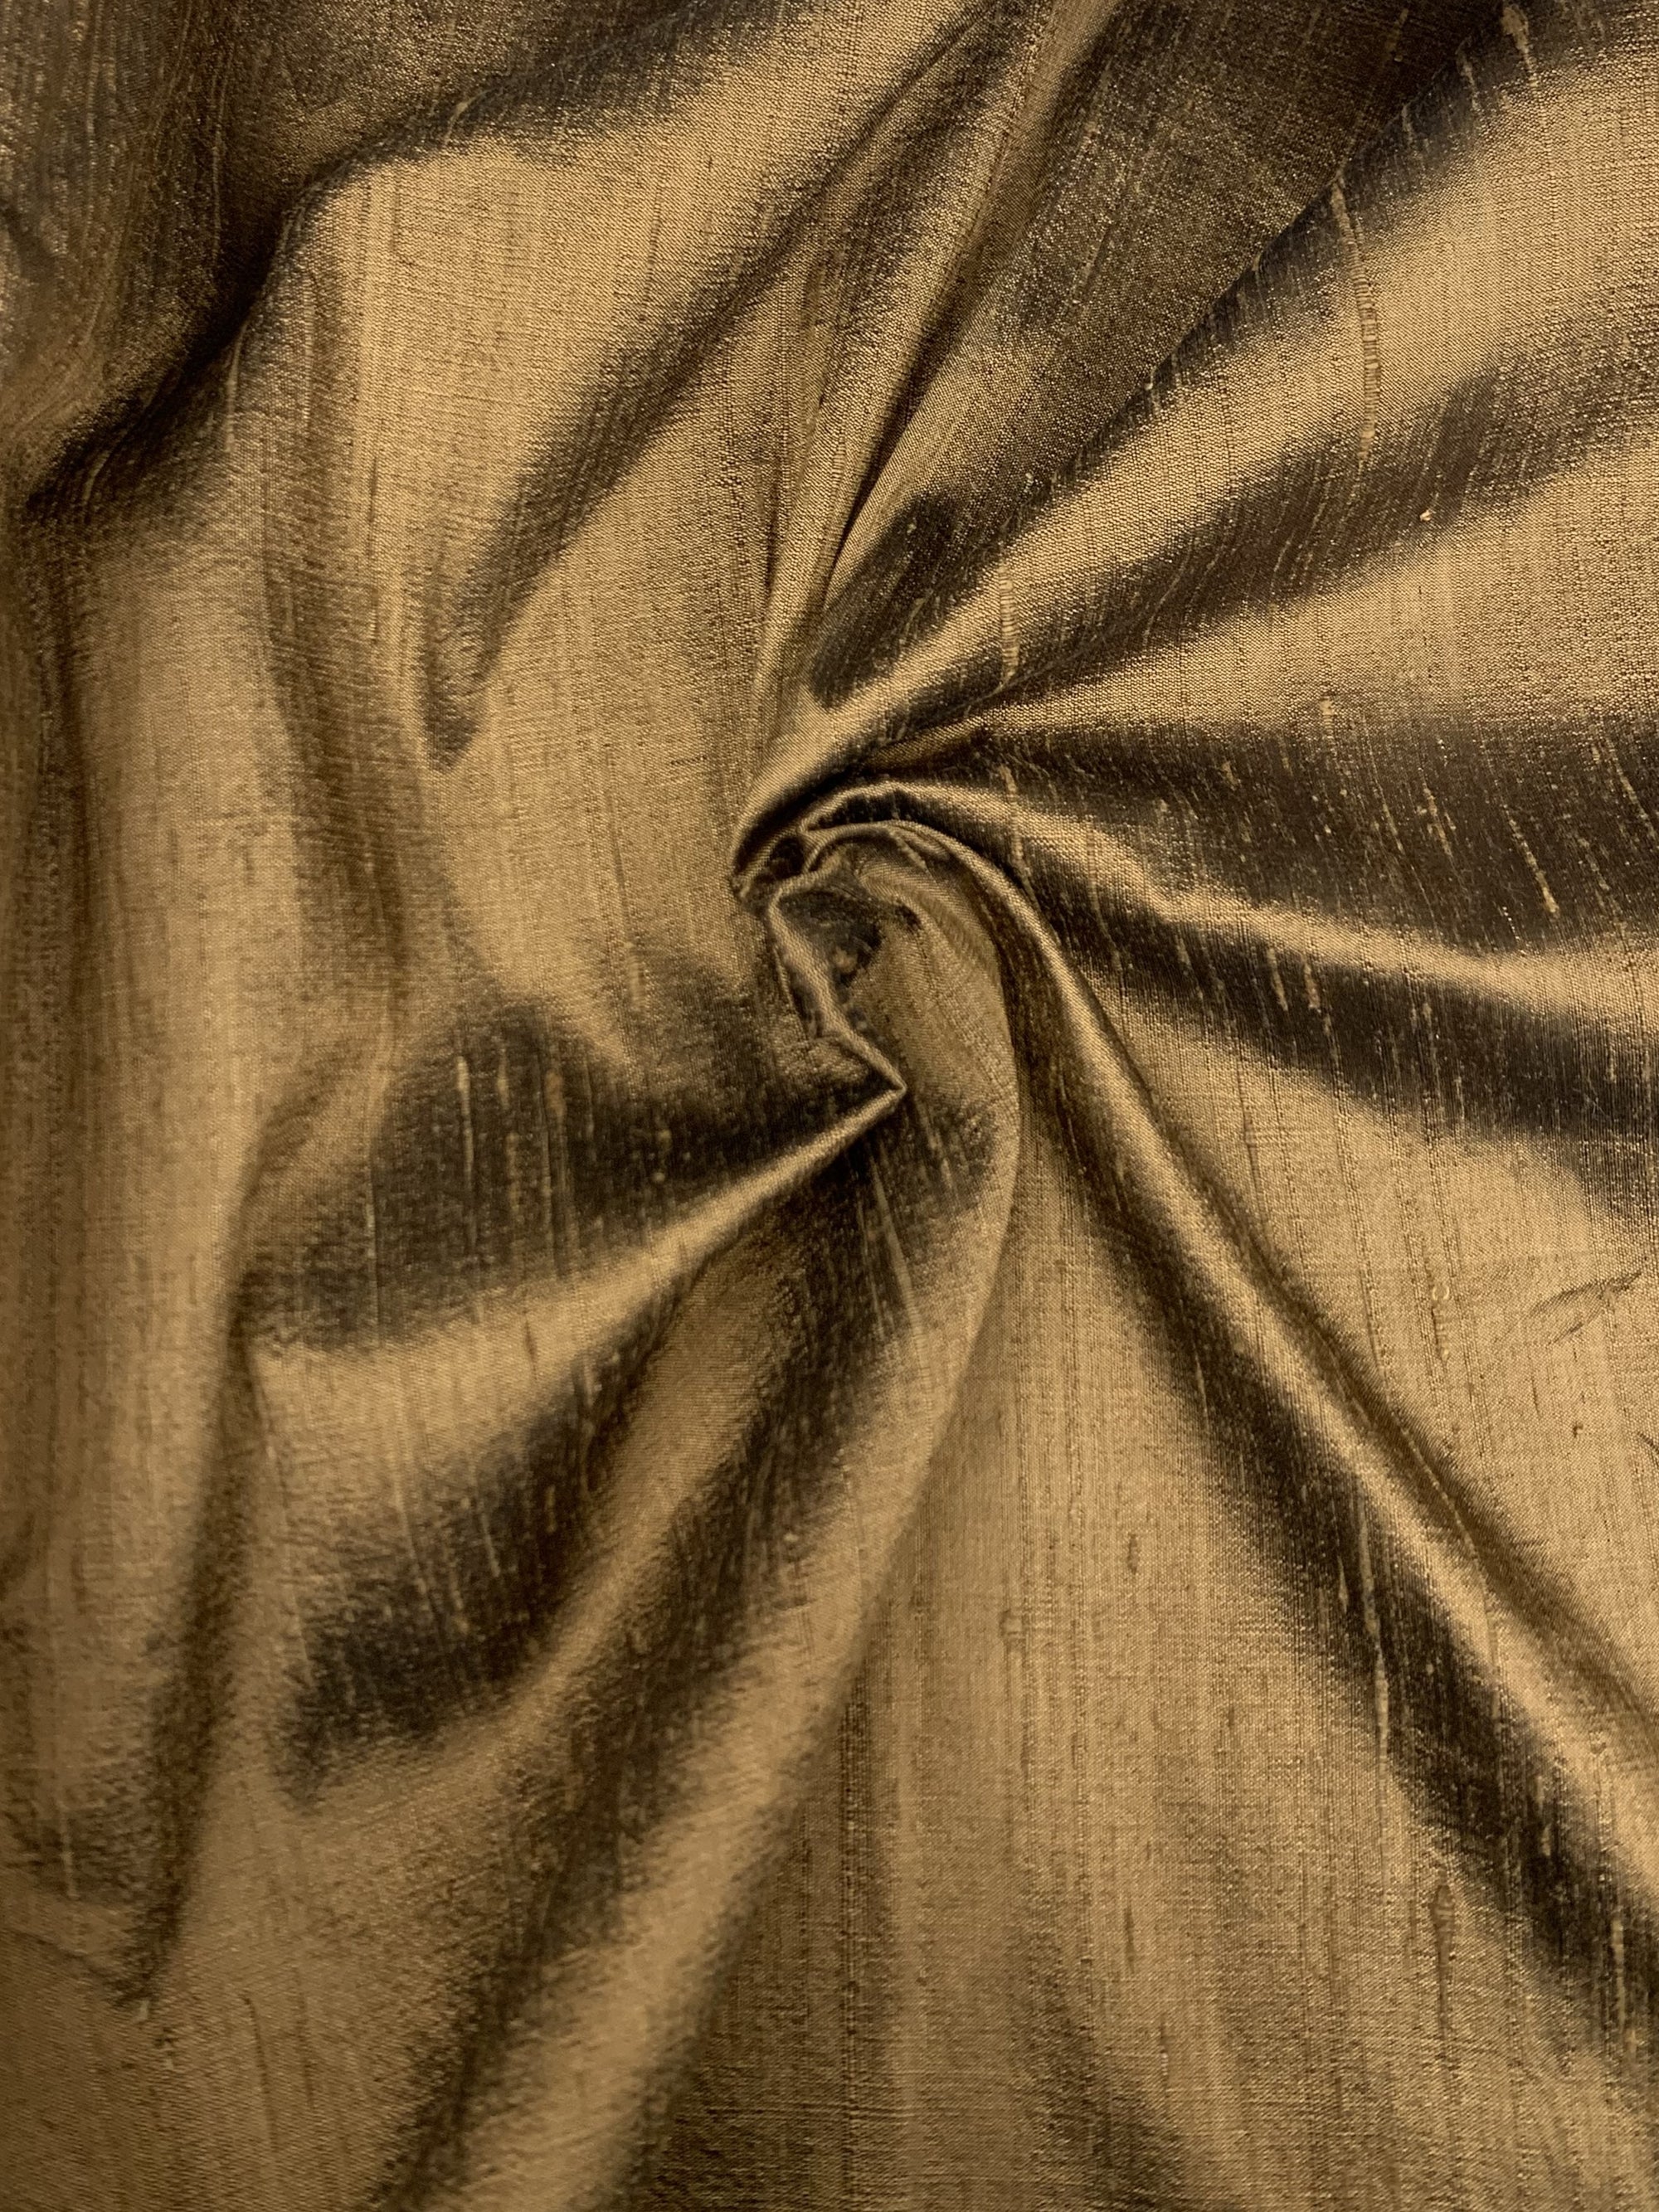 silk dupioni in a Toffee brown in a spiral.